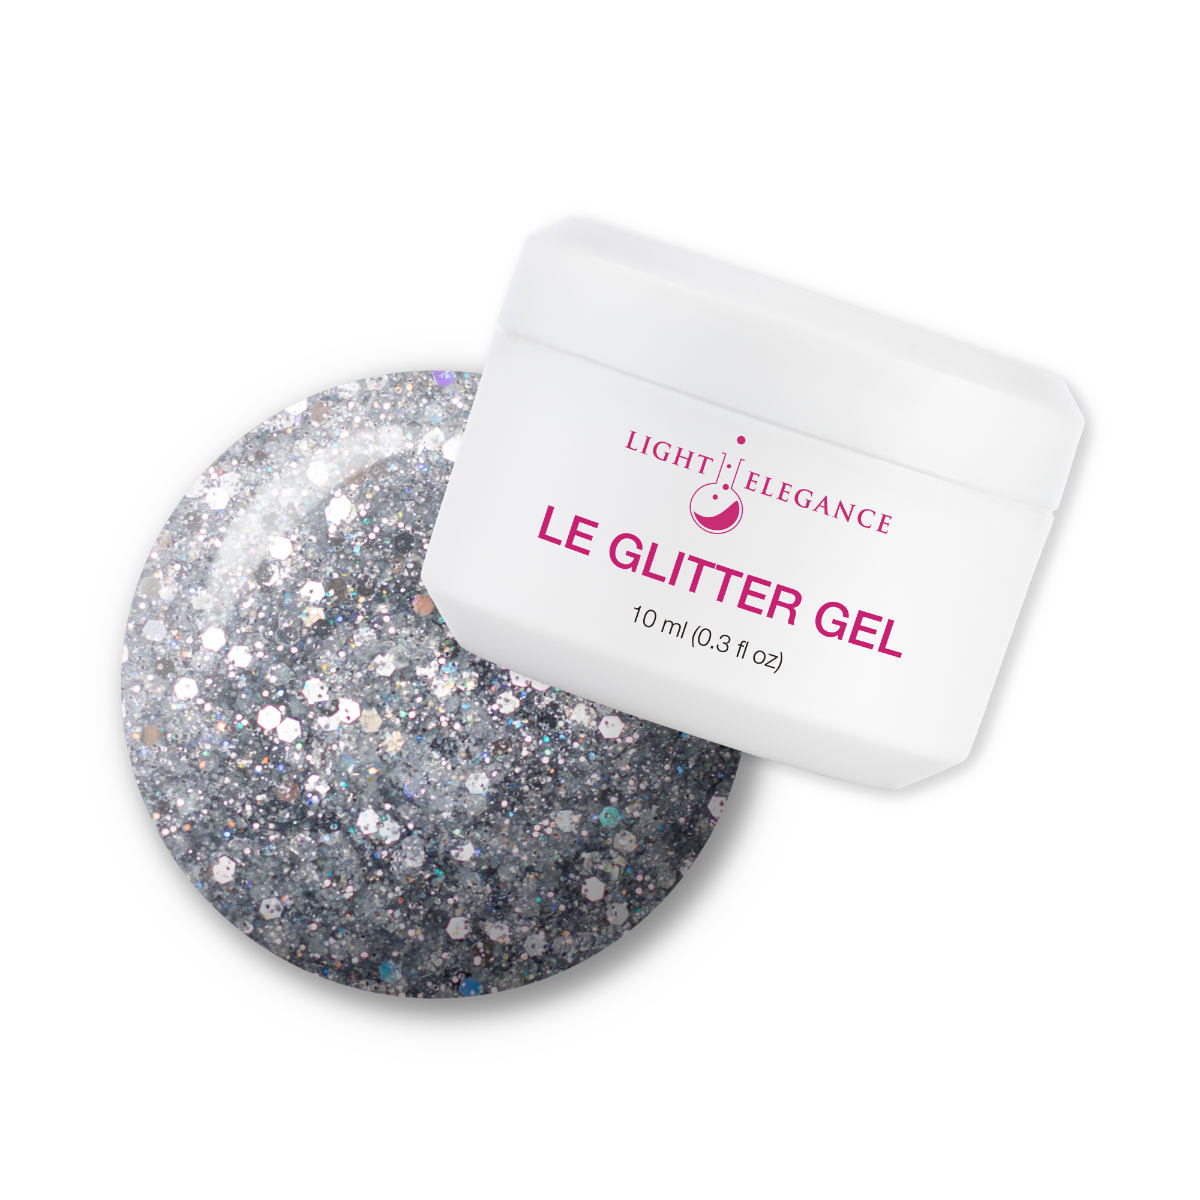 Light Elegance Glitter Gel - Big Diamond :: New Packaging